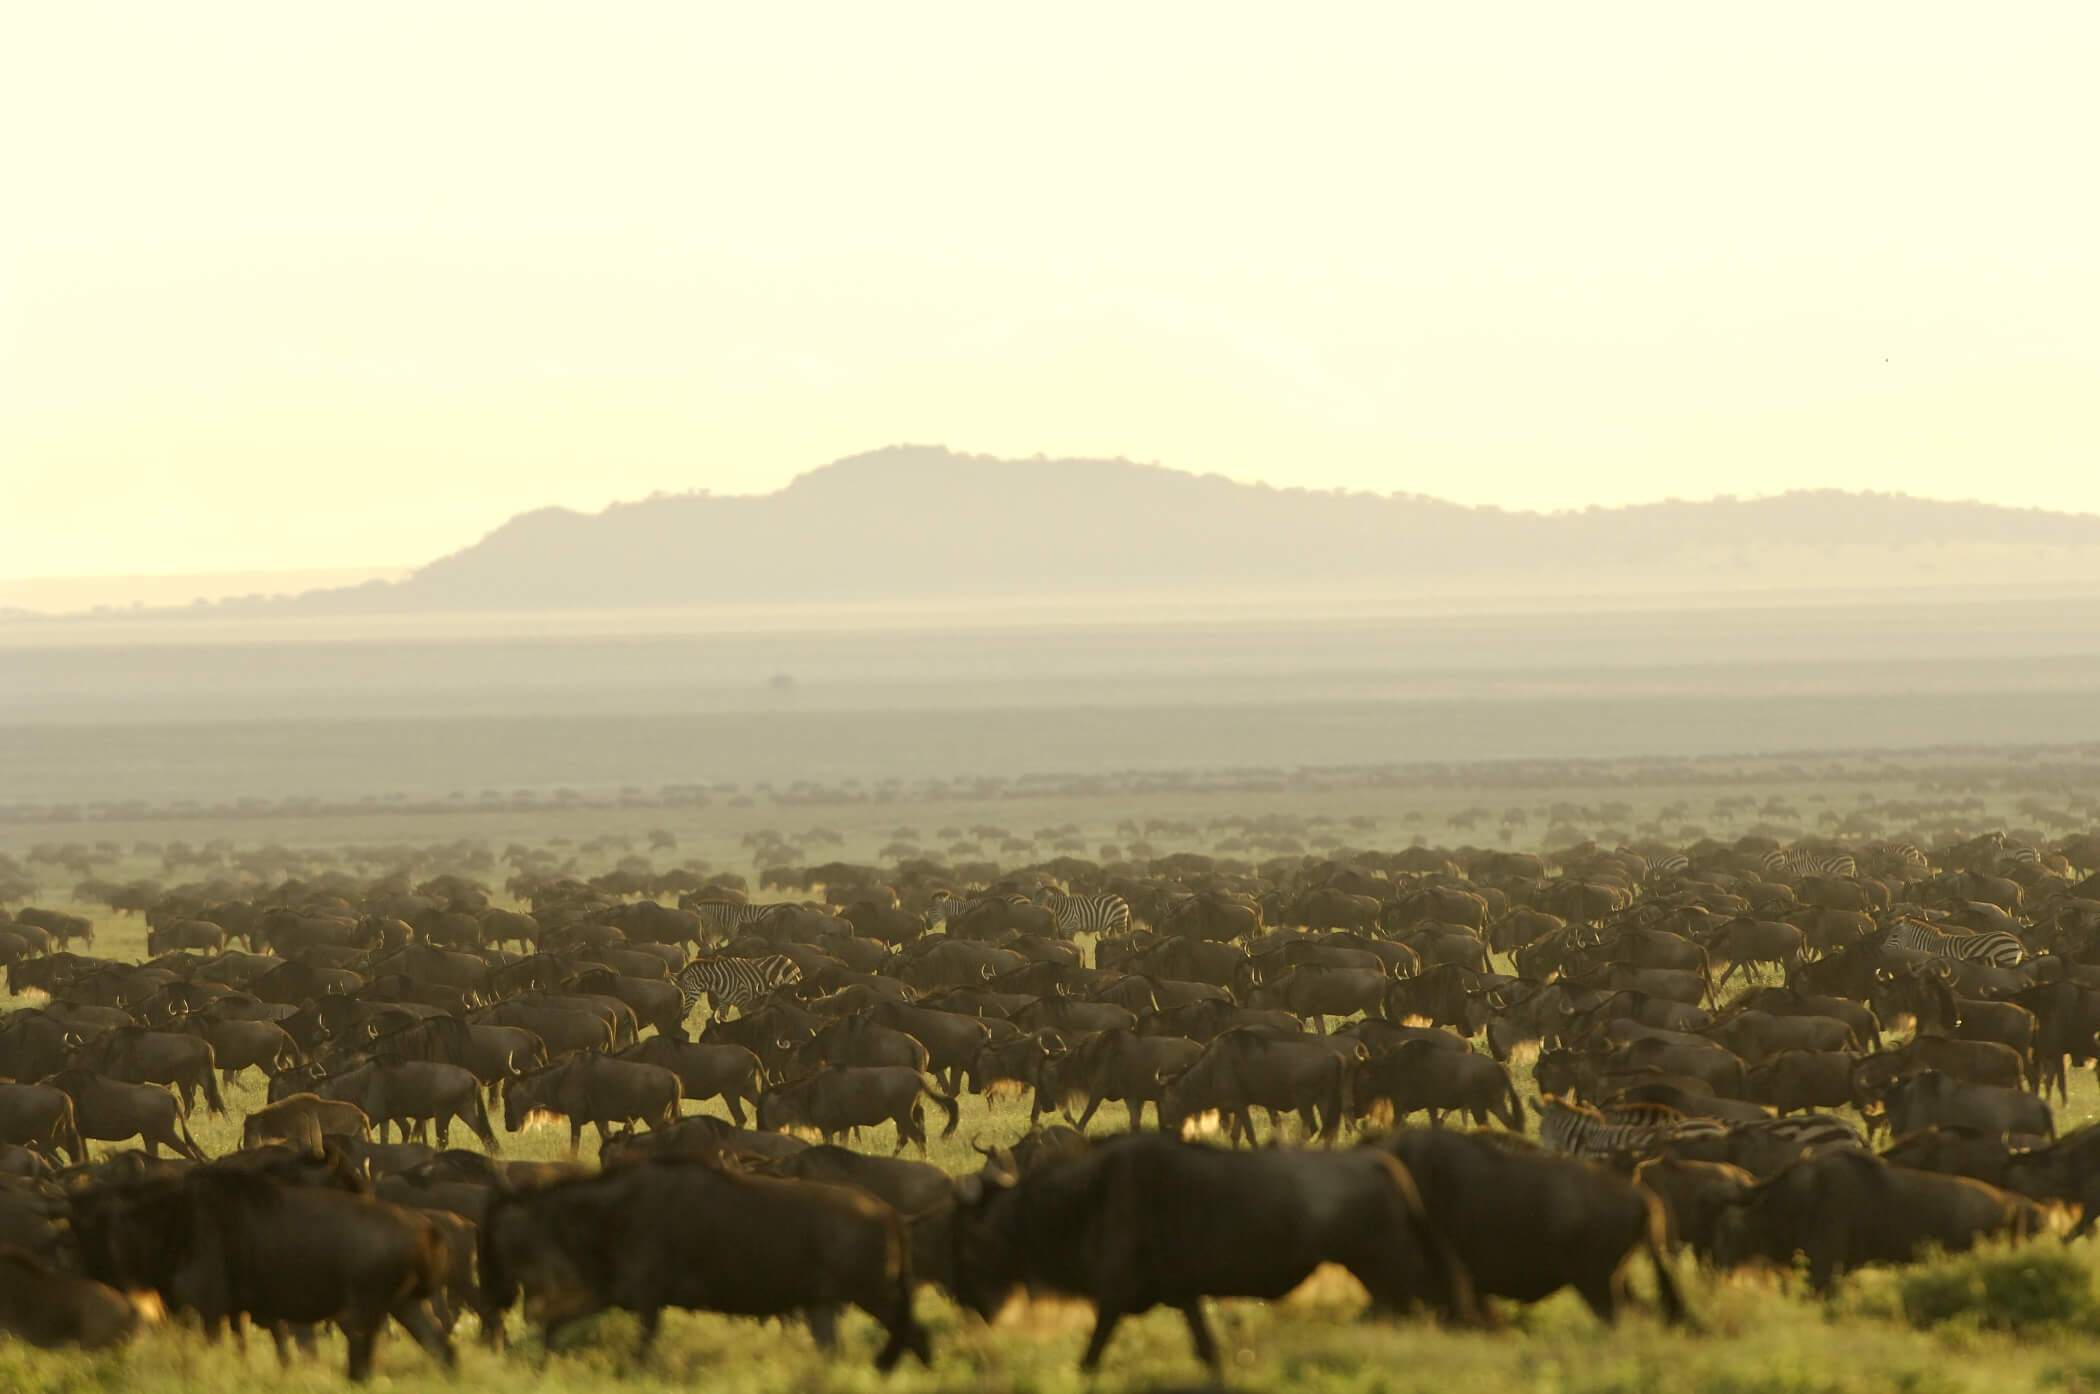 Serengeti Migration Camp